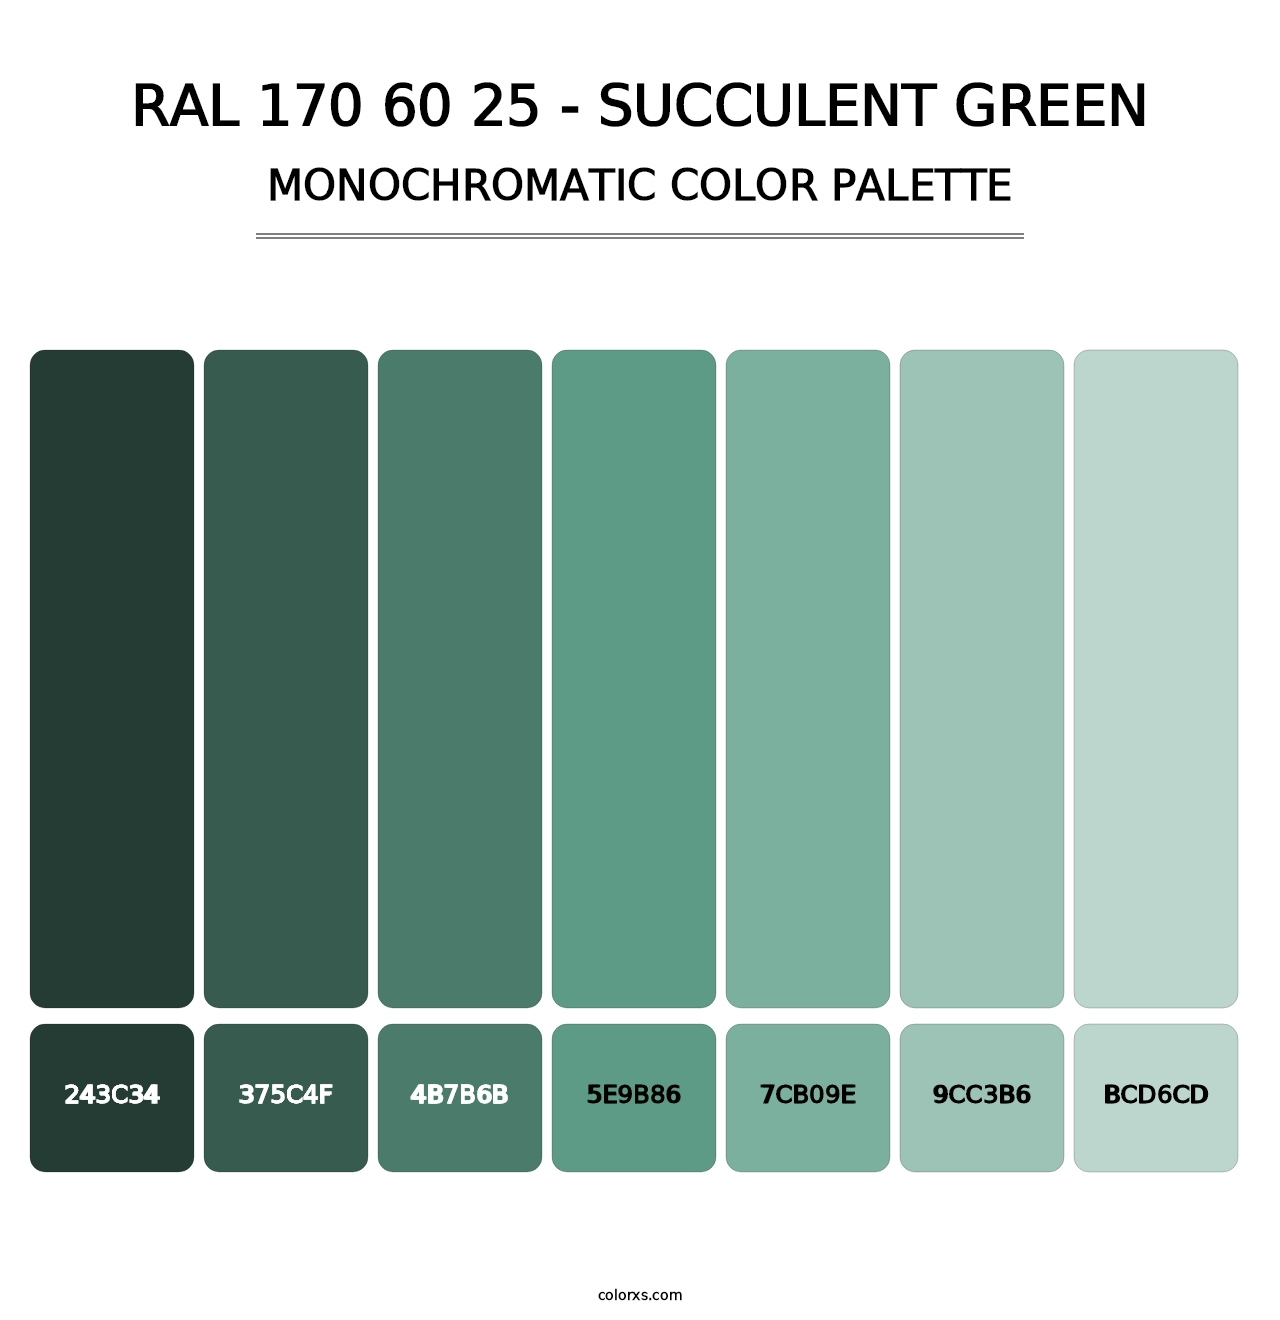 RAL 170 60 25 - Succulent Green - Monochromatic Color Palette